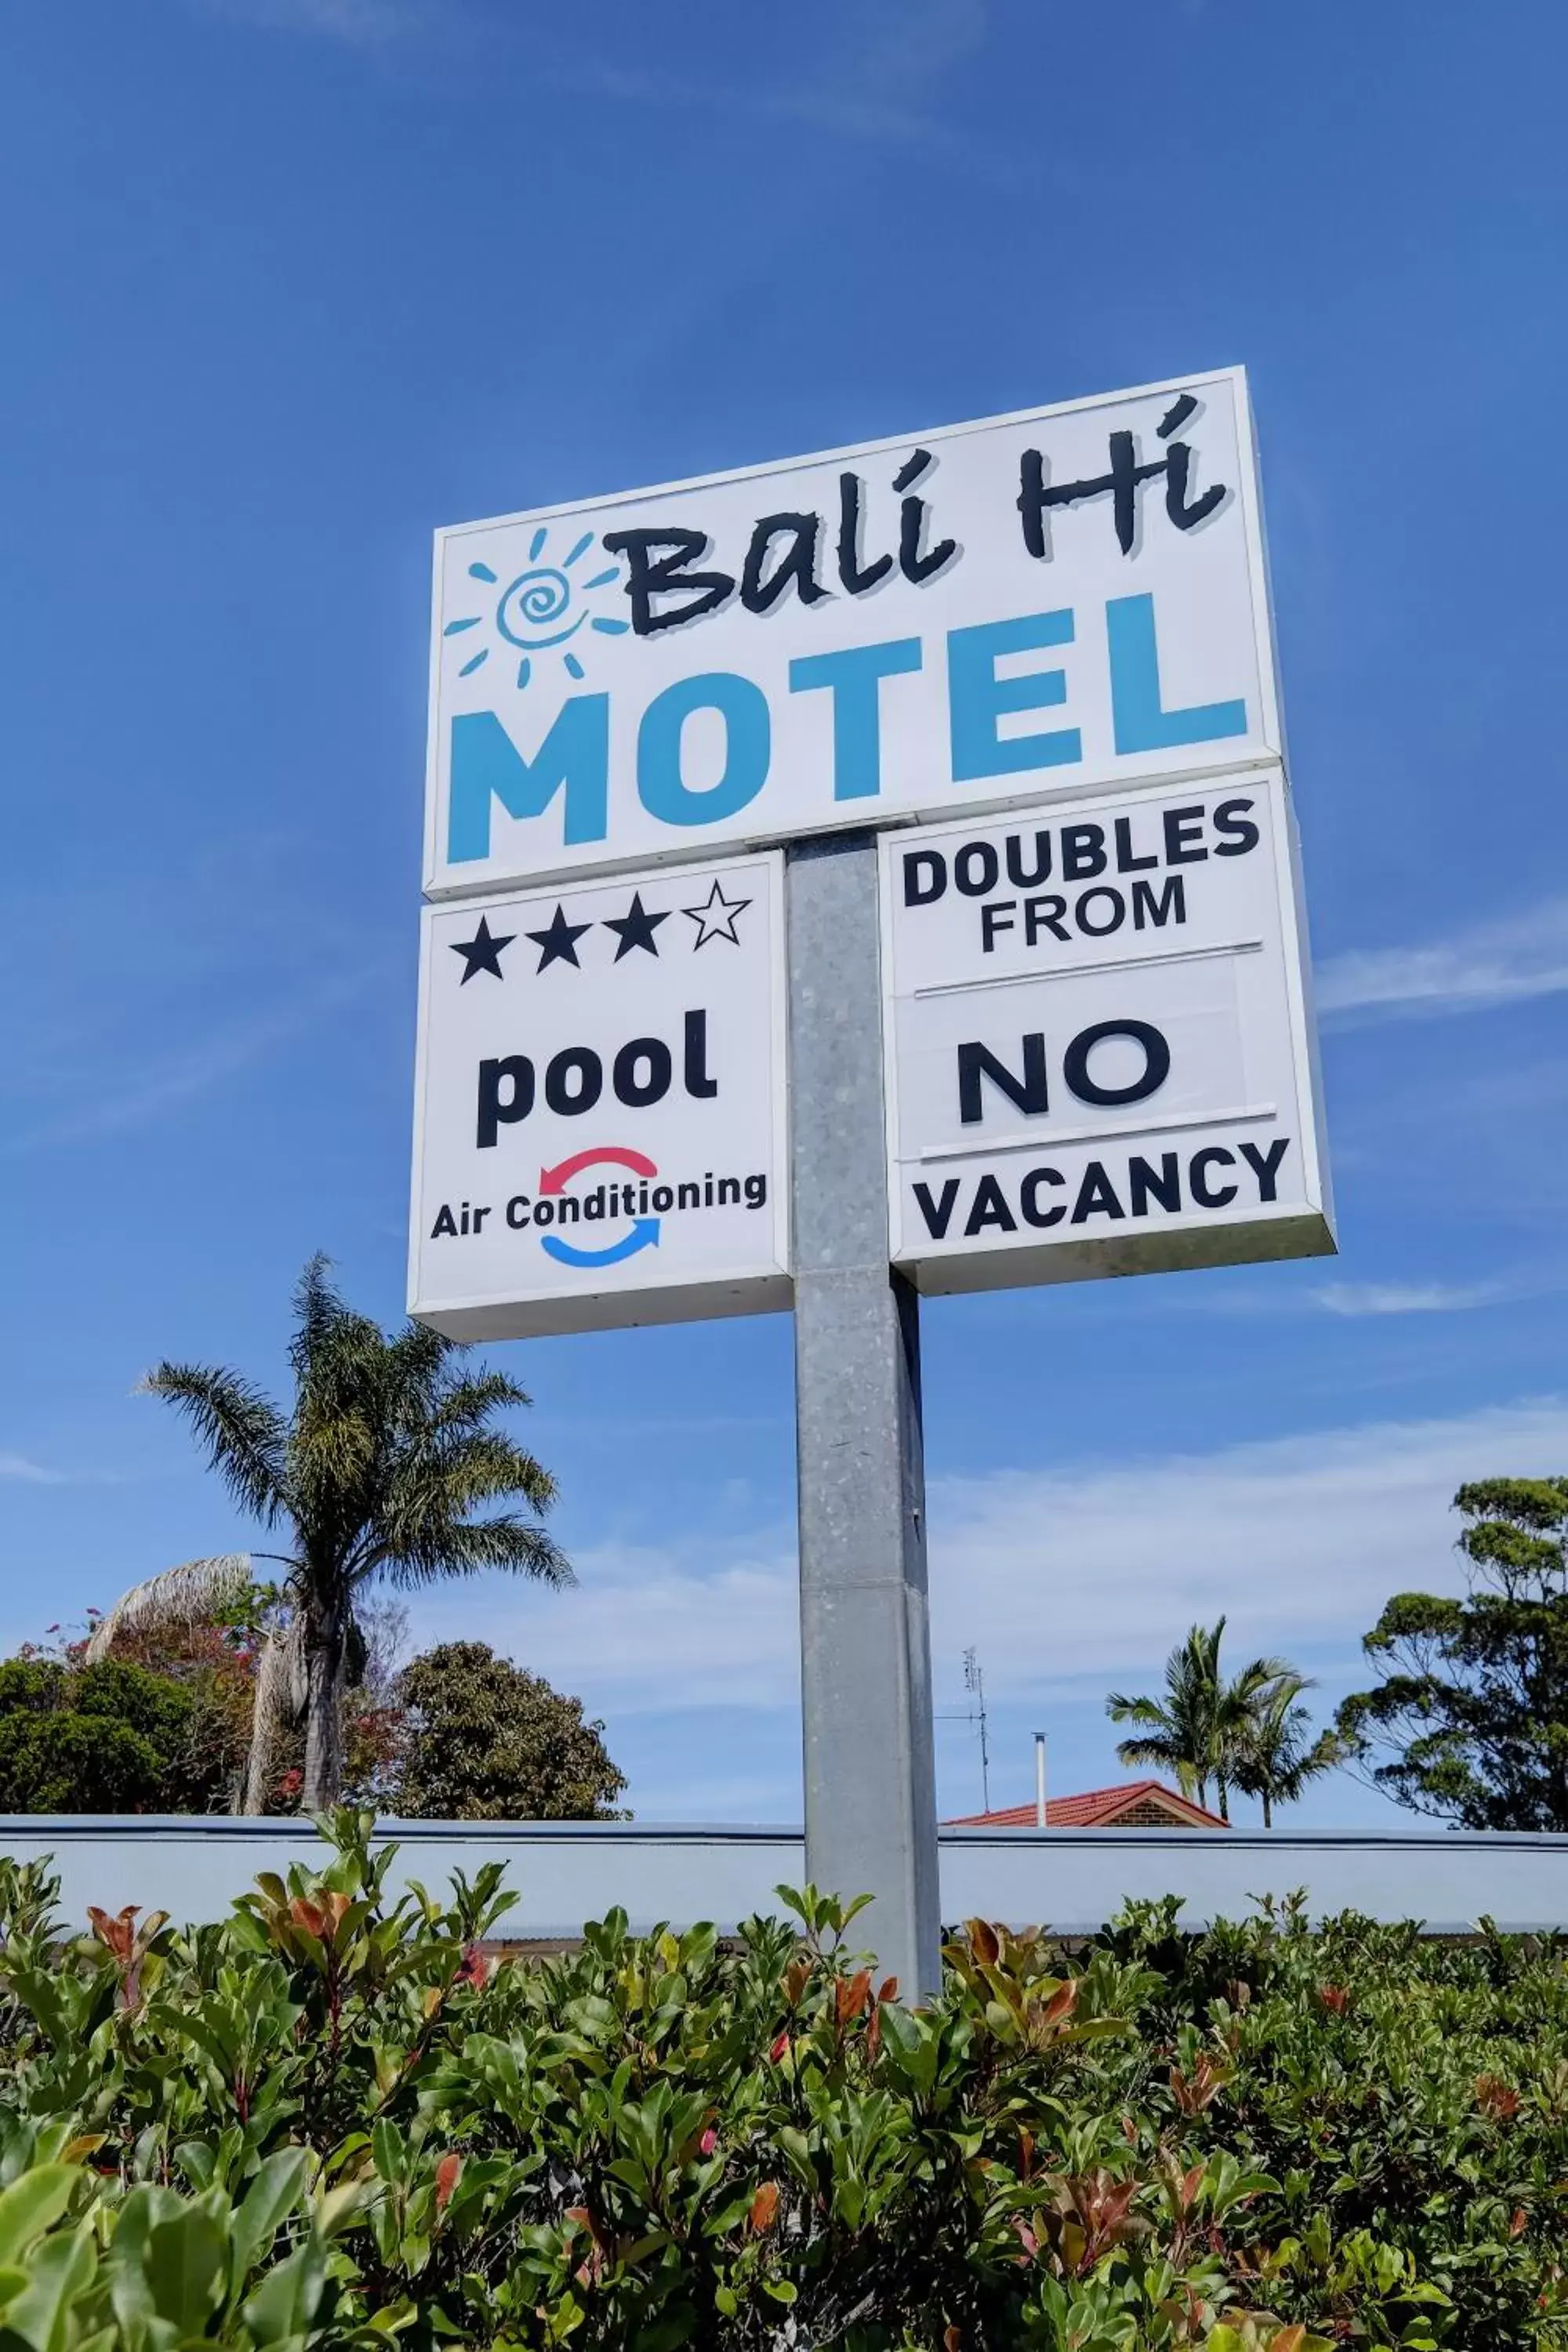 Property logo or sign, Logo/Certificate/Sign/Award in Bali Hi Motel